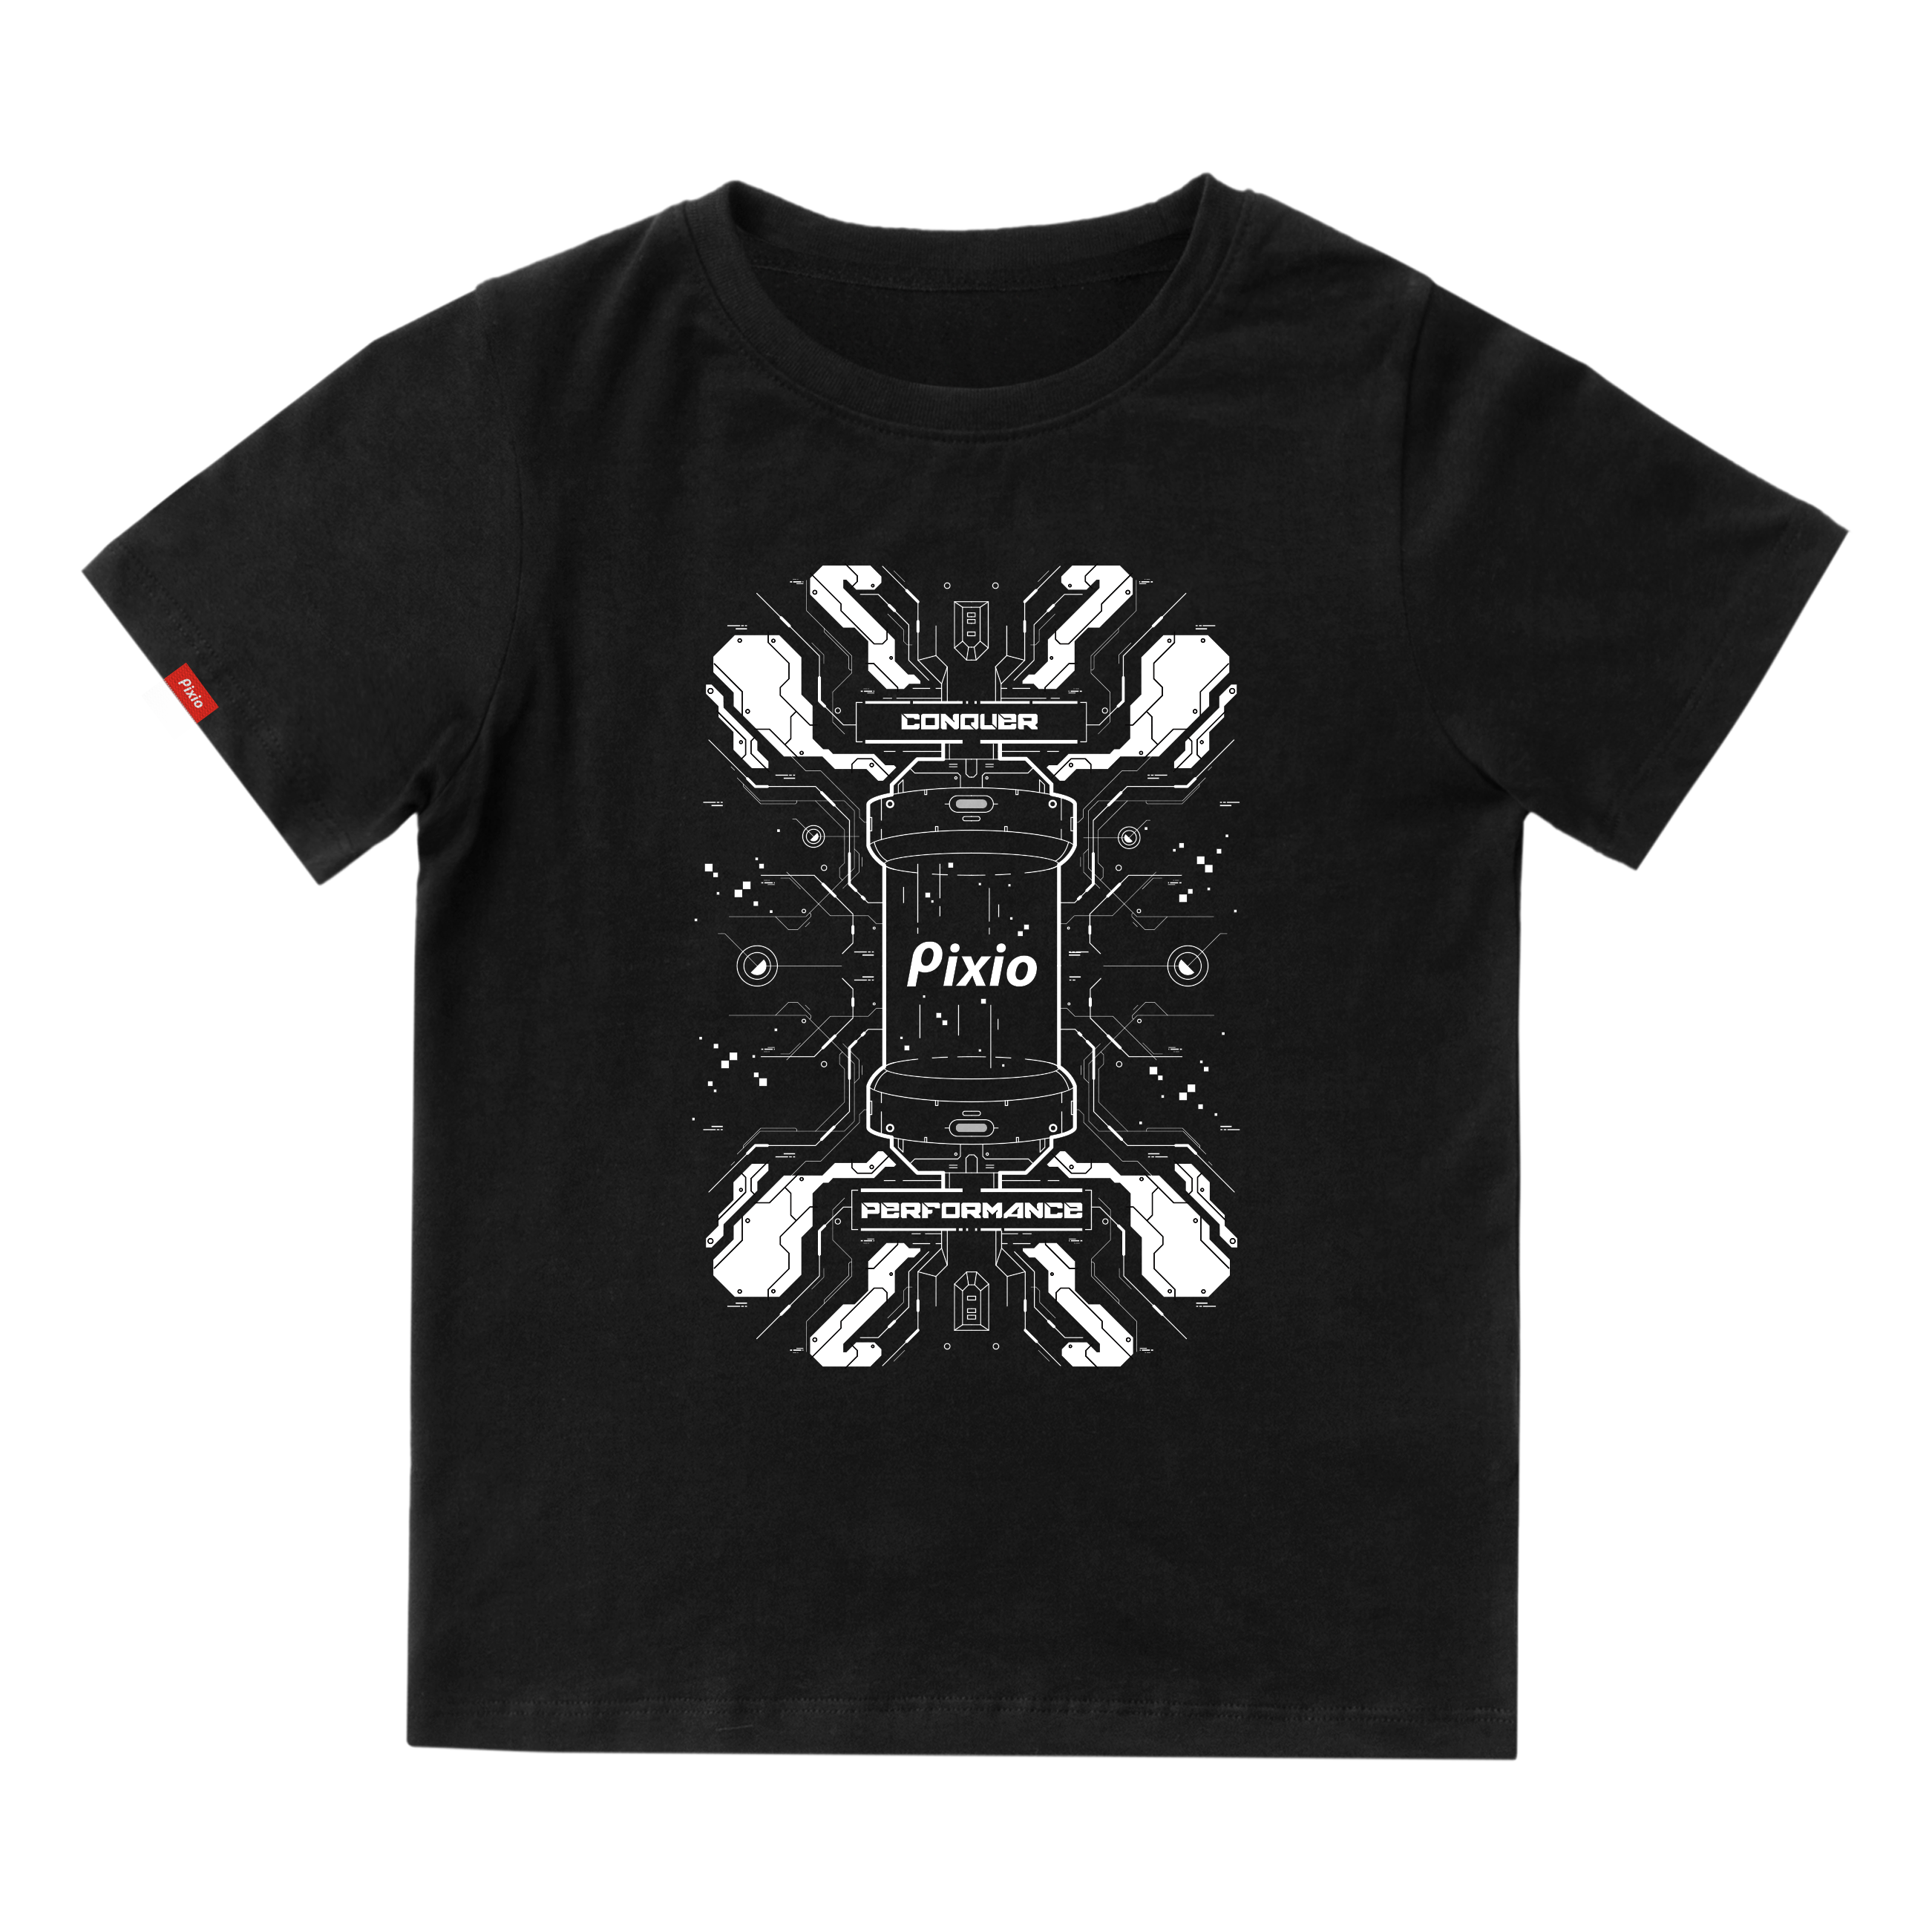 Lab T-Shirt: White Graphic on Black